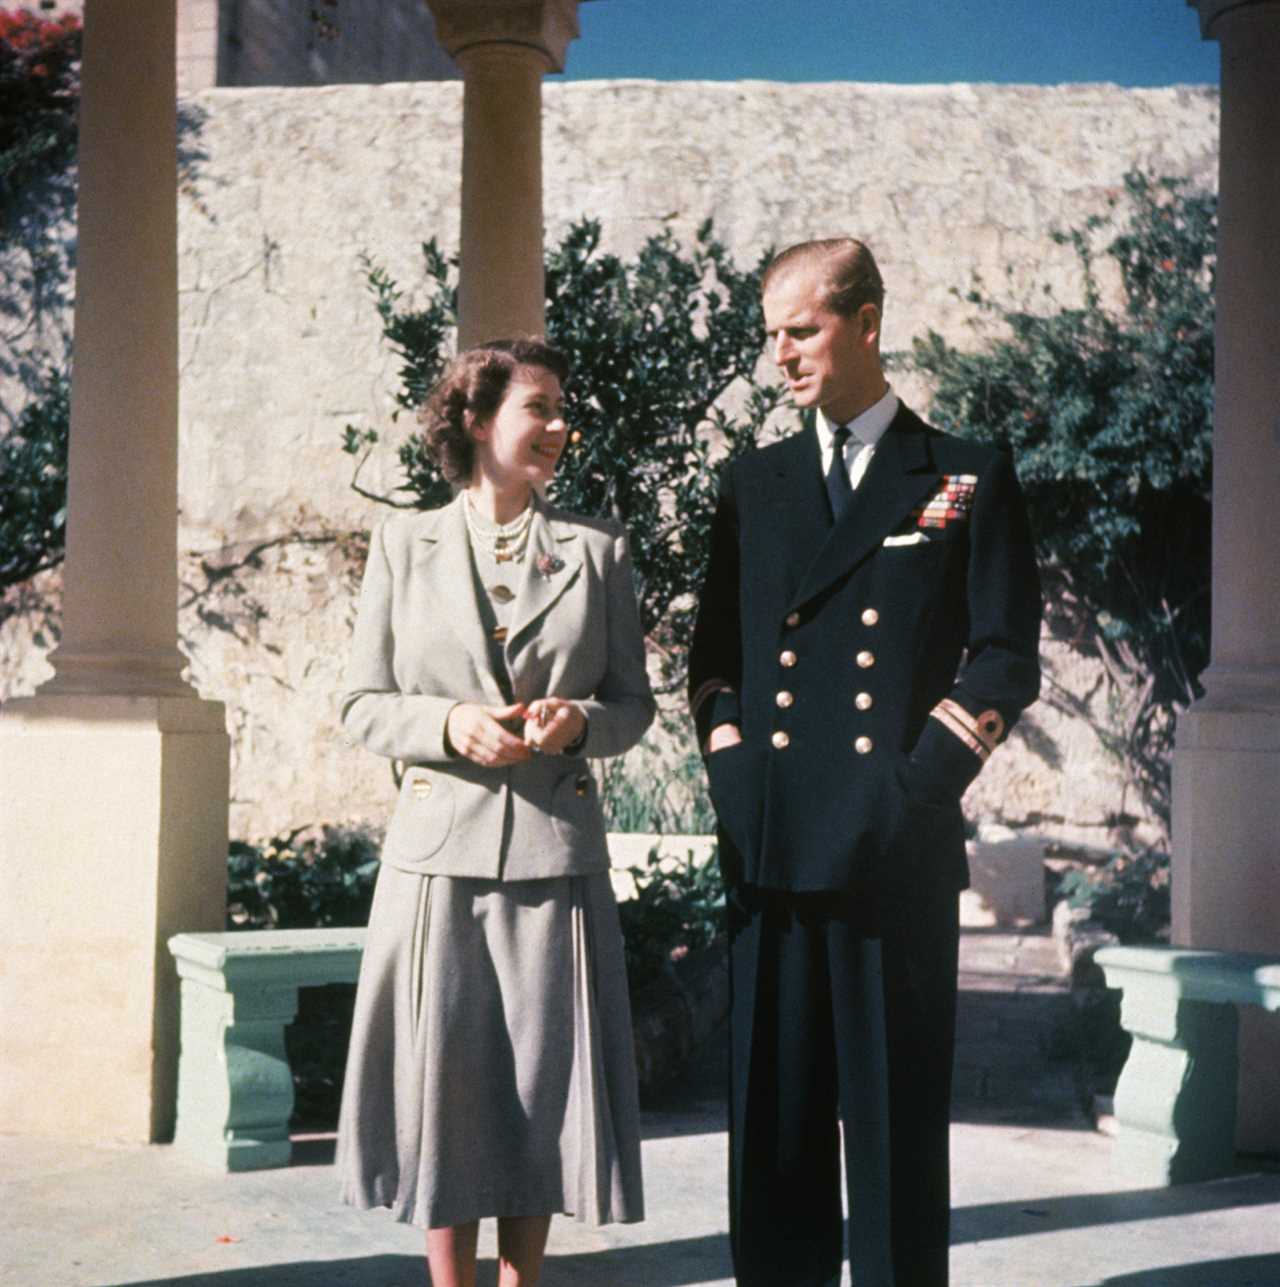 Queen Elizabeth II and Prince Philip in Malta back in 1950